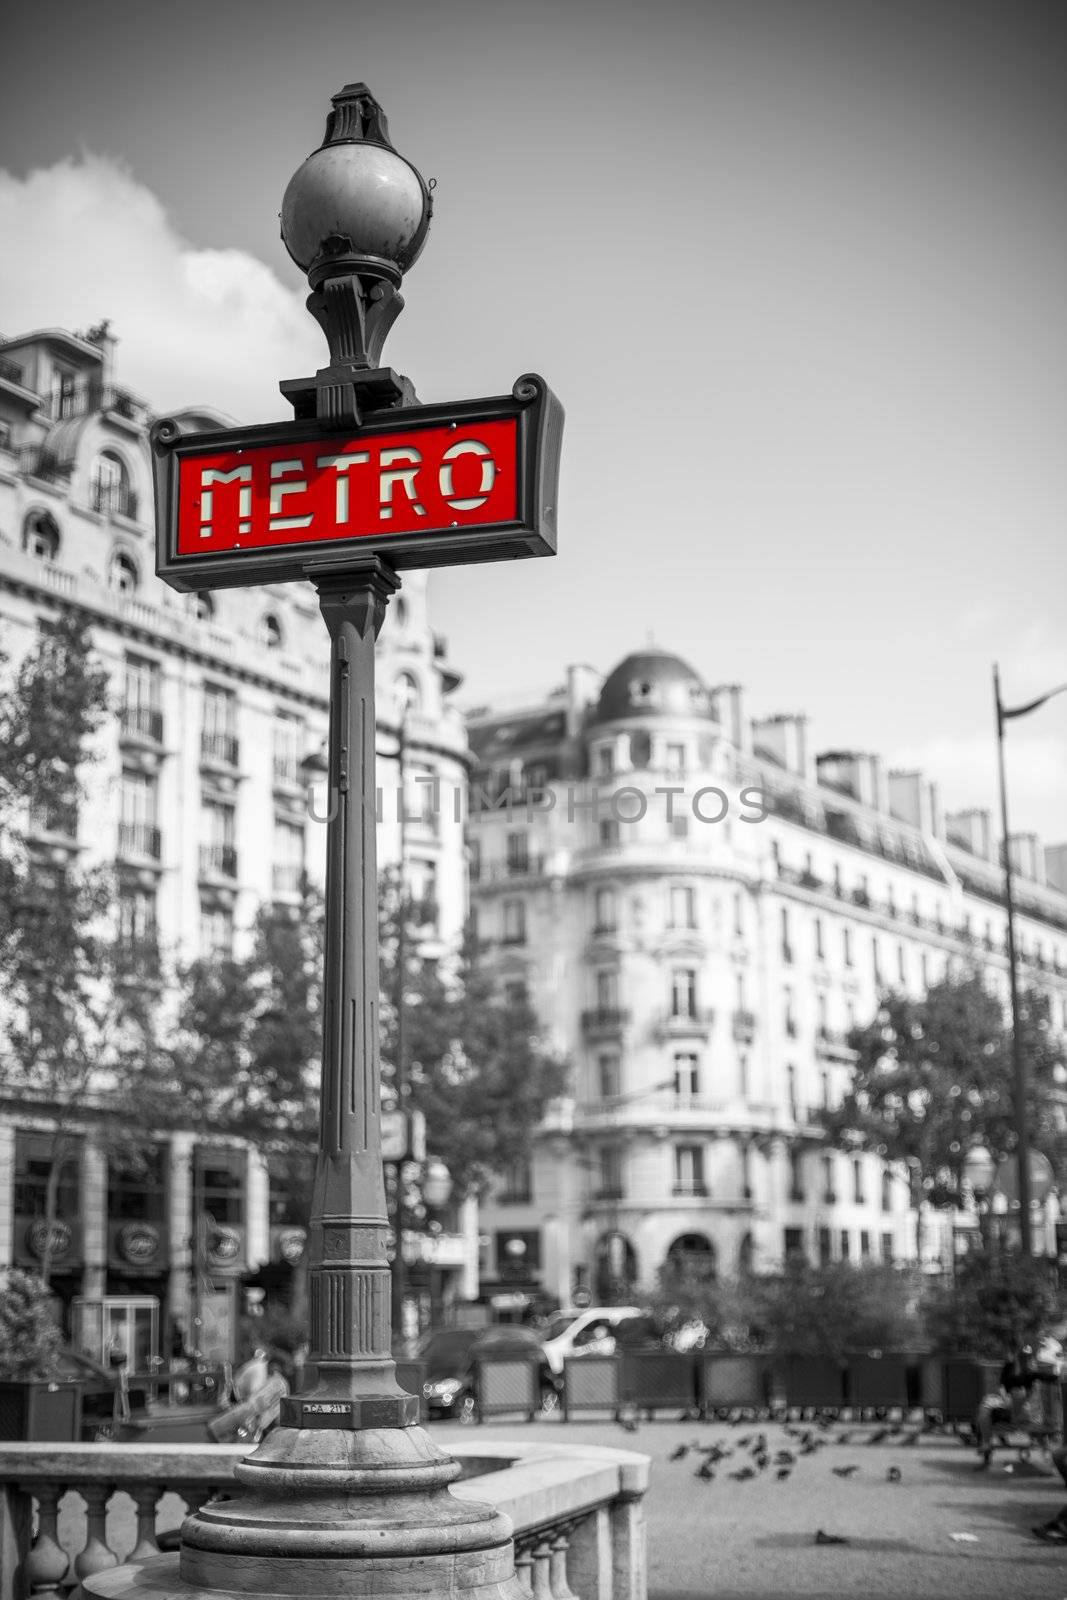 Metro sign for subway transportation in paris by maxoliki